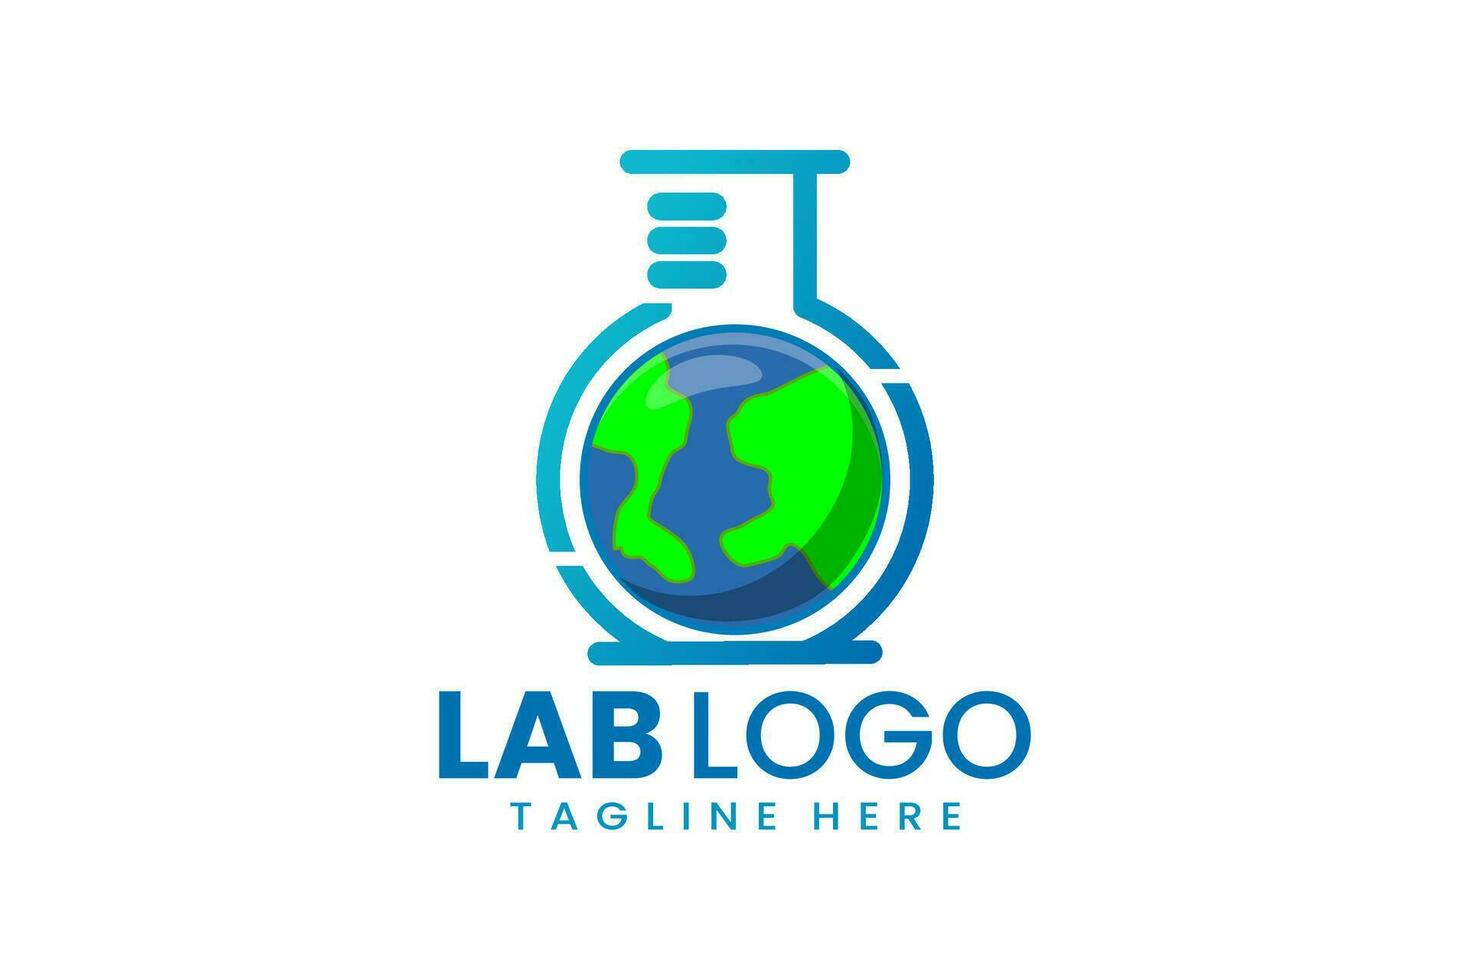 plano moderno sencillo laboratorio logo modelo icono símbolo vector diseño ilustración